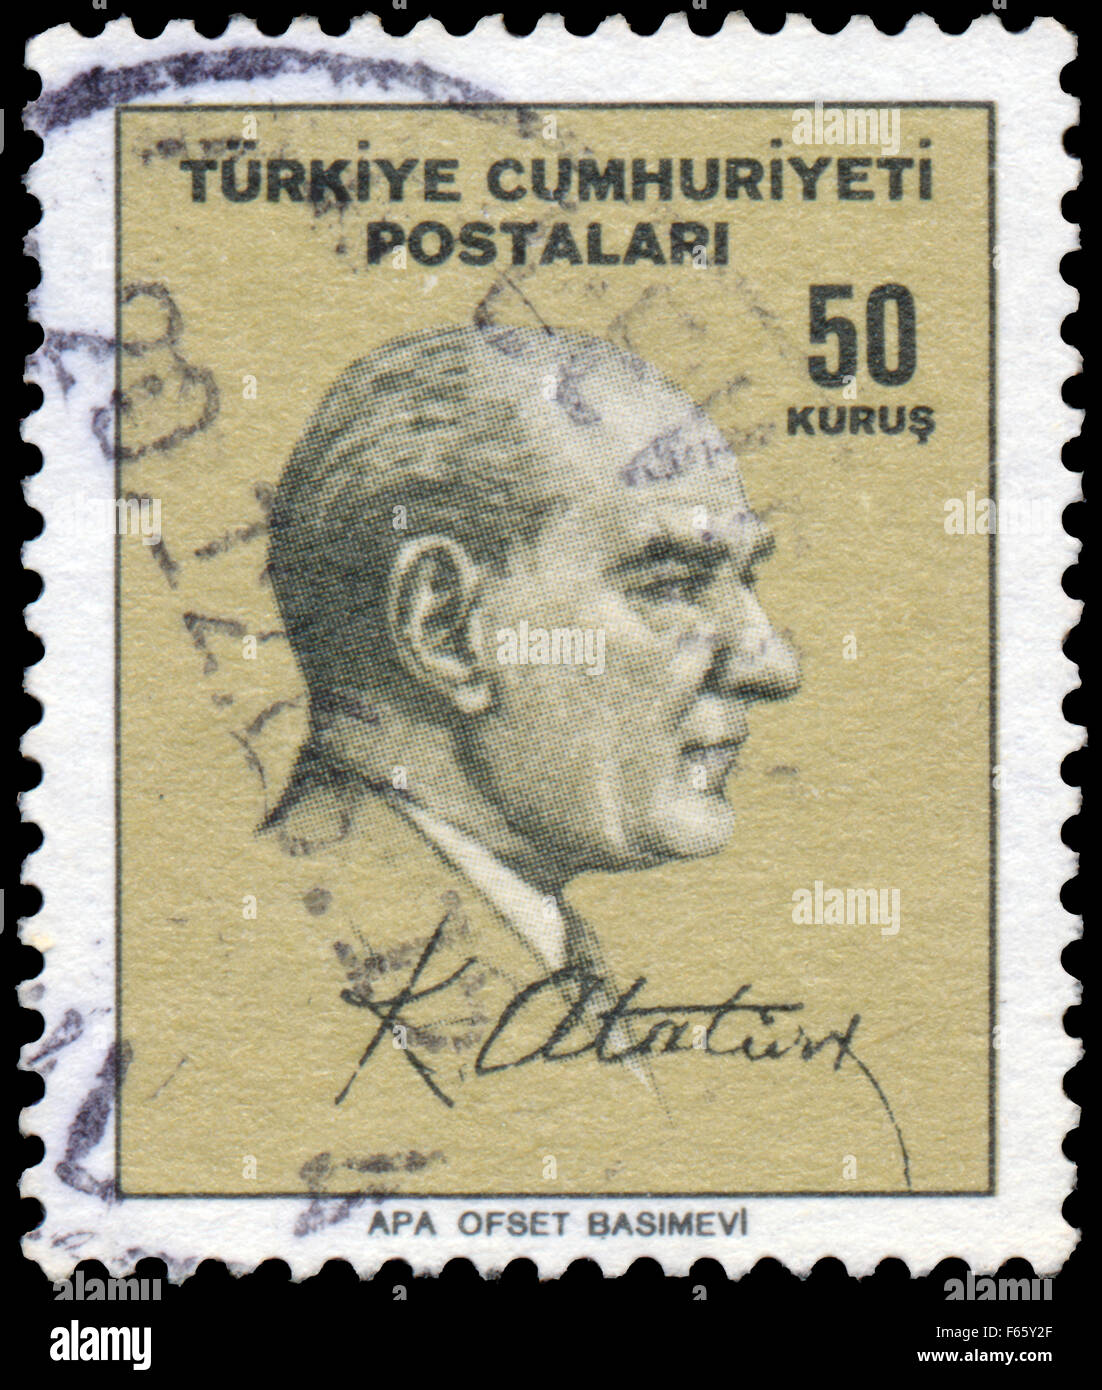 TURKEY - CIRCA 1965: Stamp printed in Turkey shows portrait of Mustafa Kemal Ataturk, circa 1965 Stock Photo